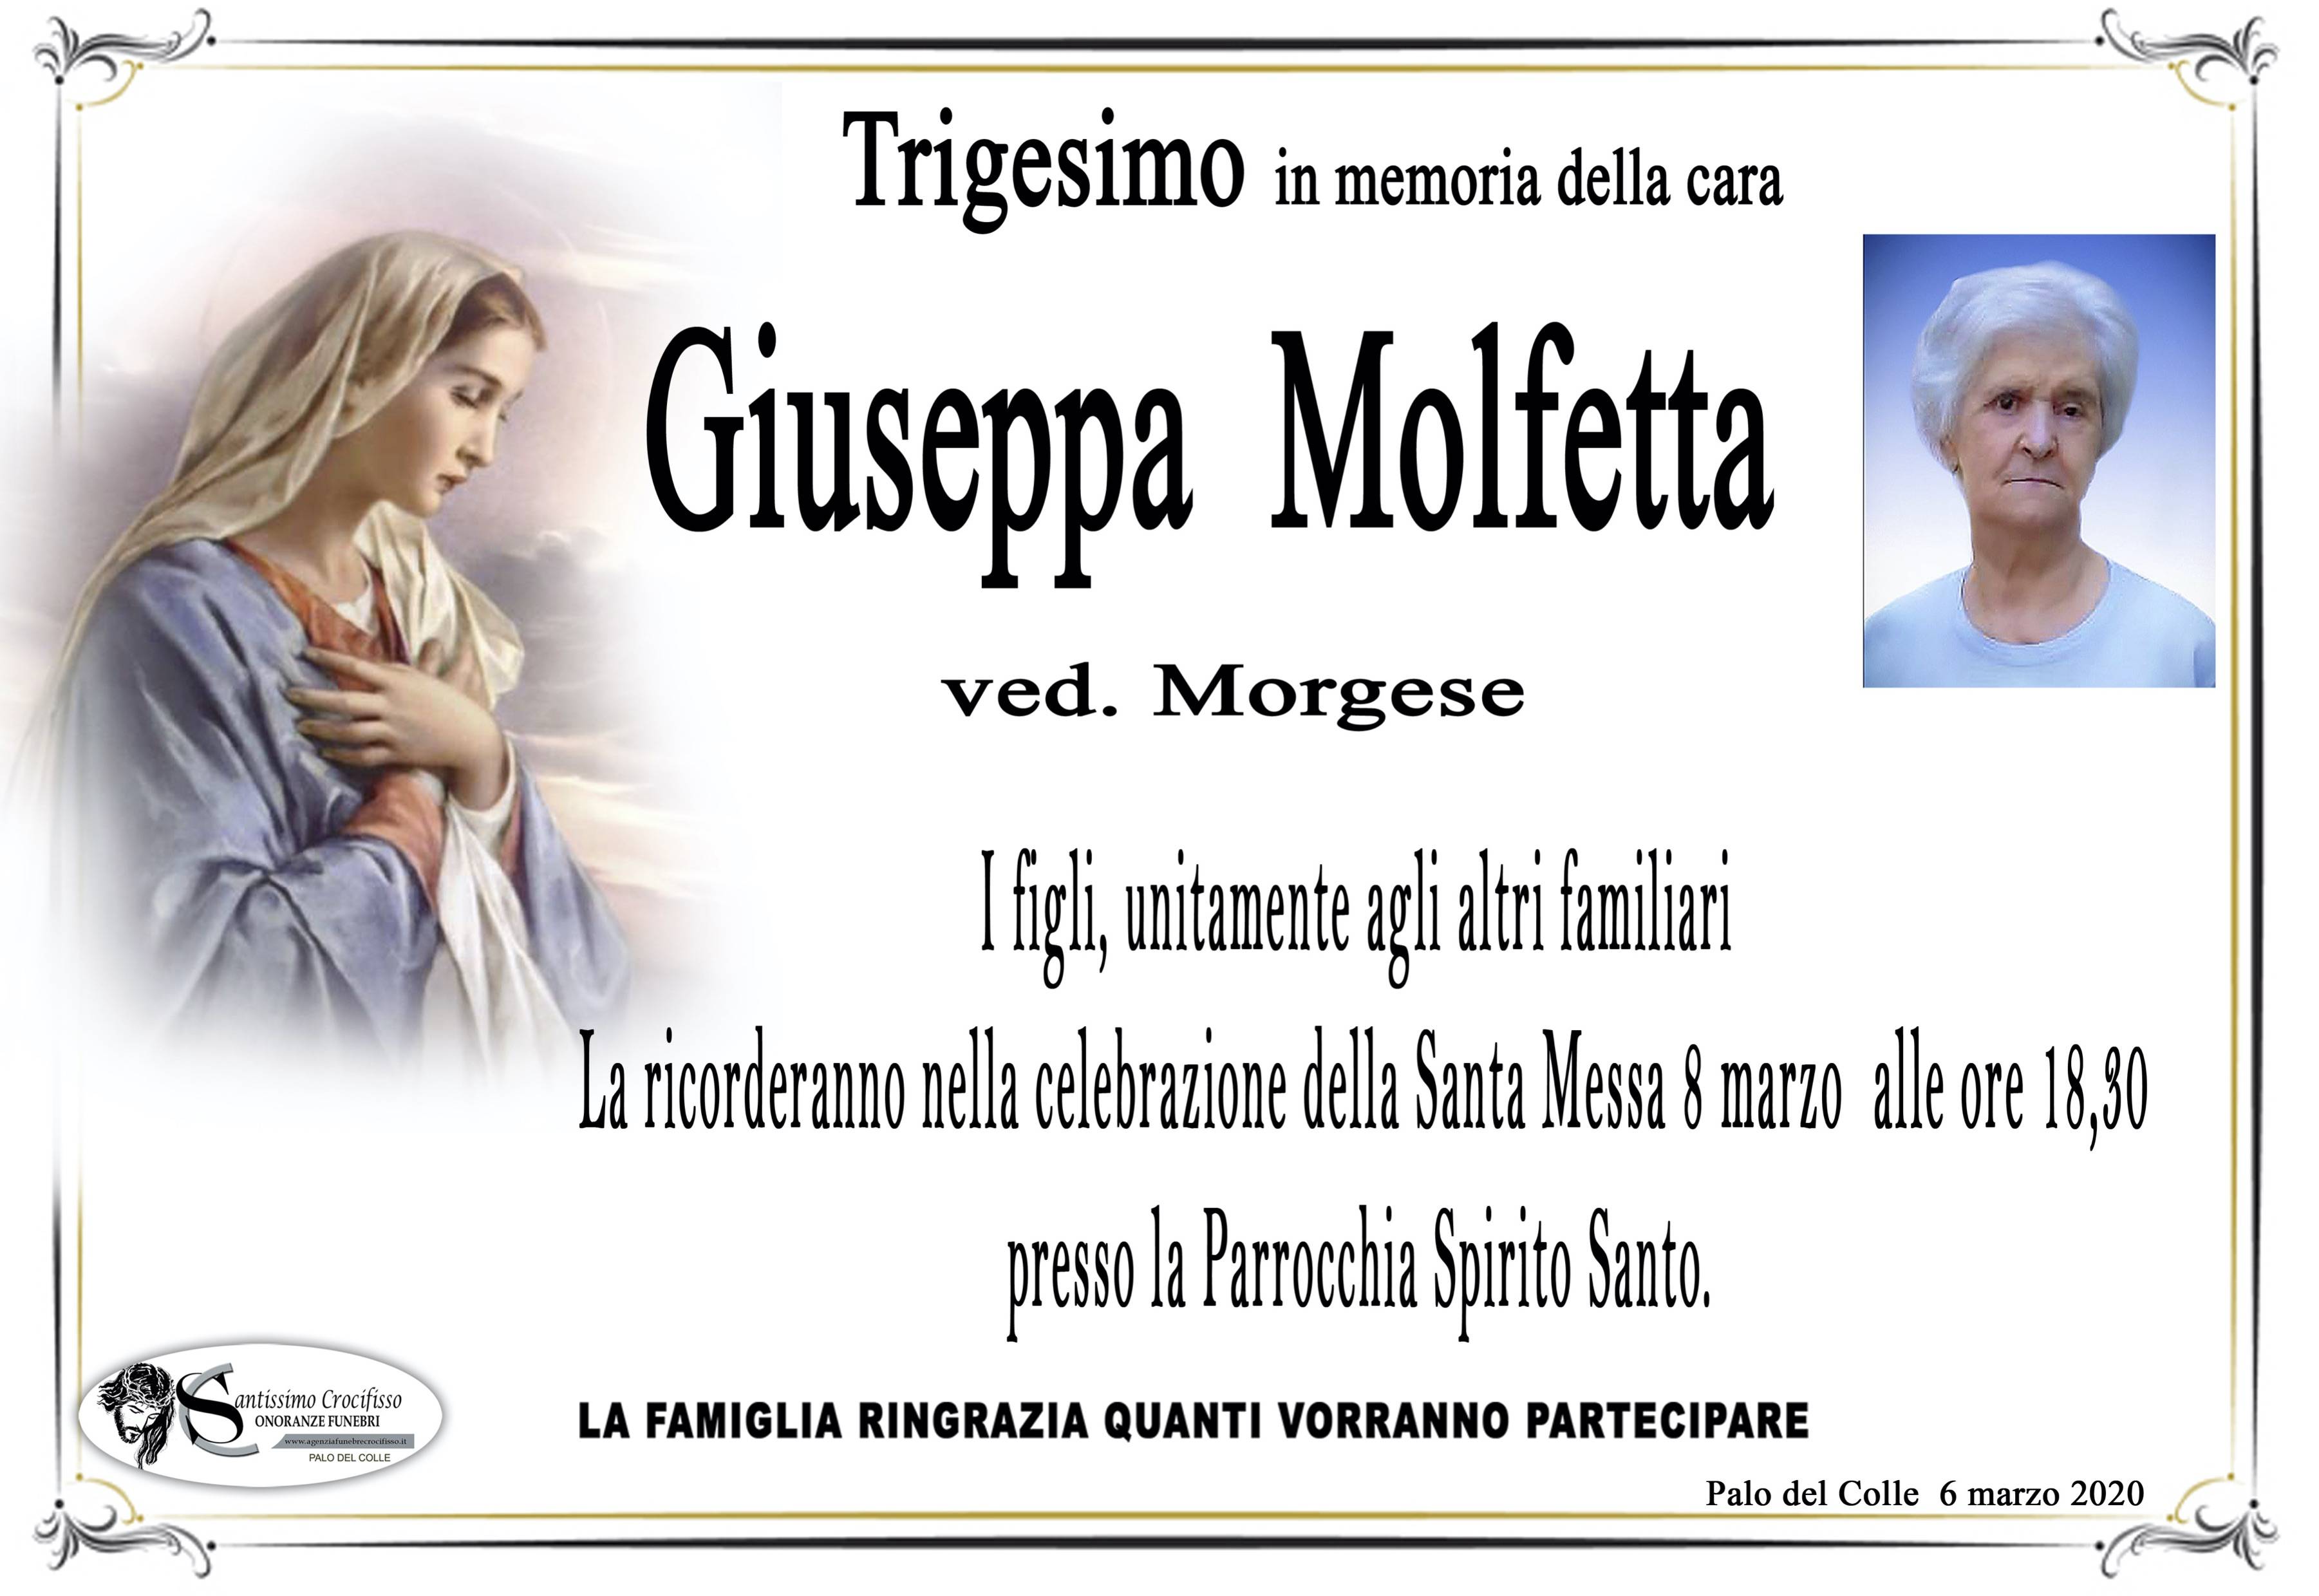 Giuseppa Molfetta